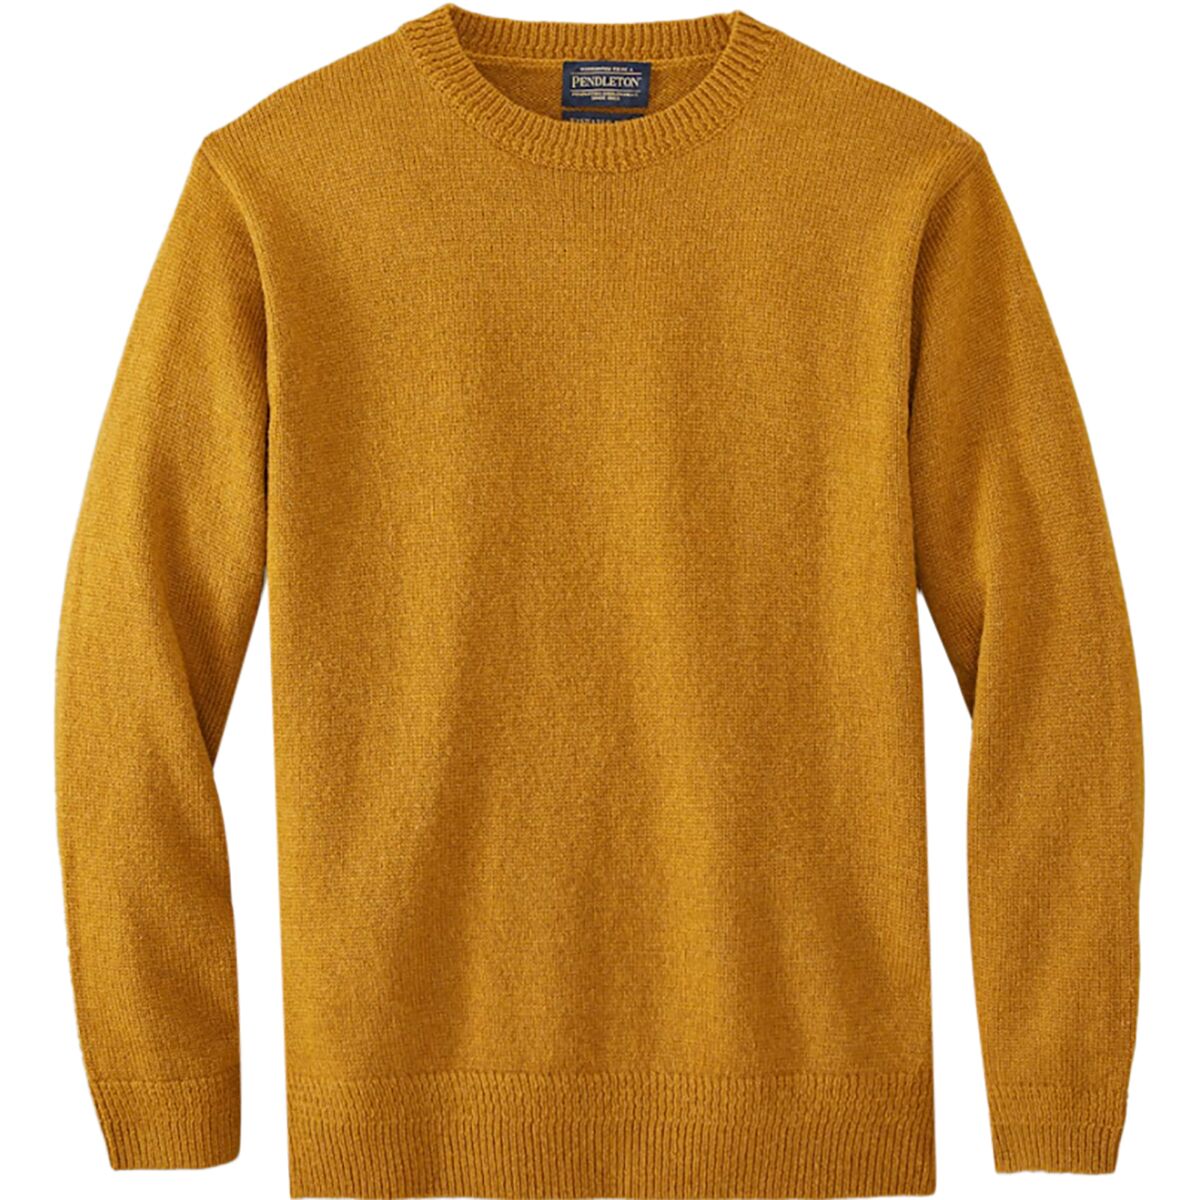 Shetland Crew Sweater - Men